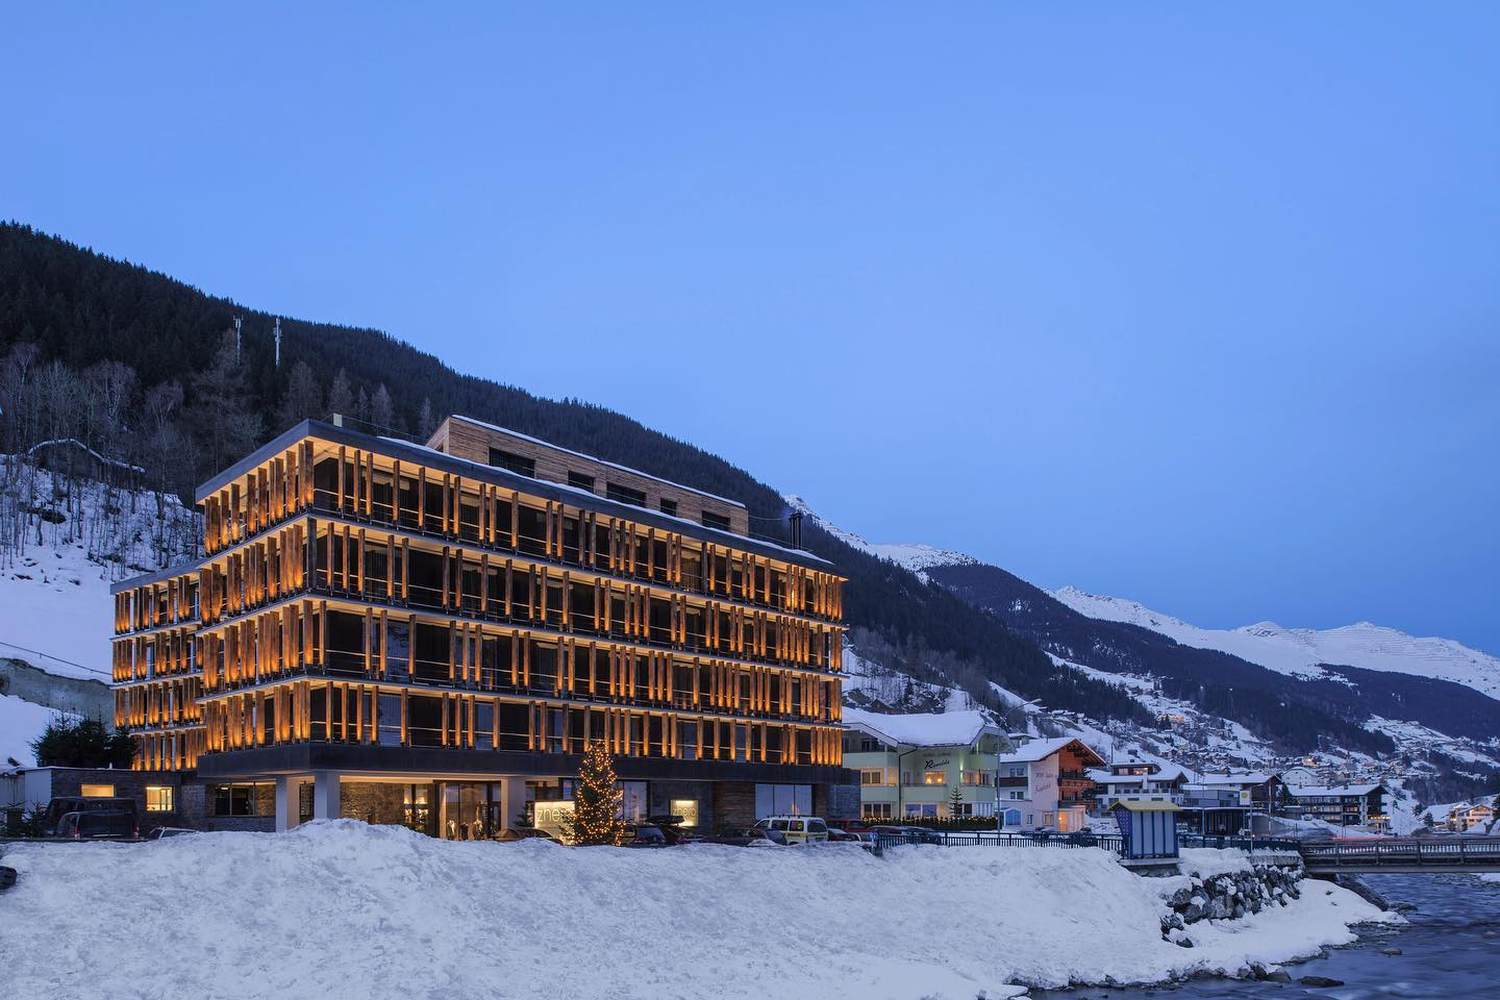 Hotel Zhero Ischgl, Tyrol - Austria